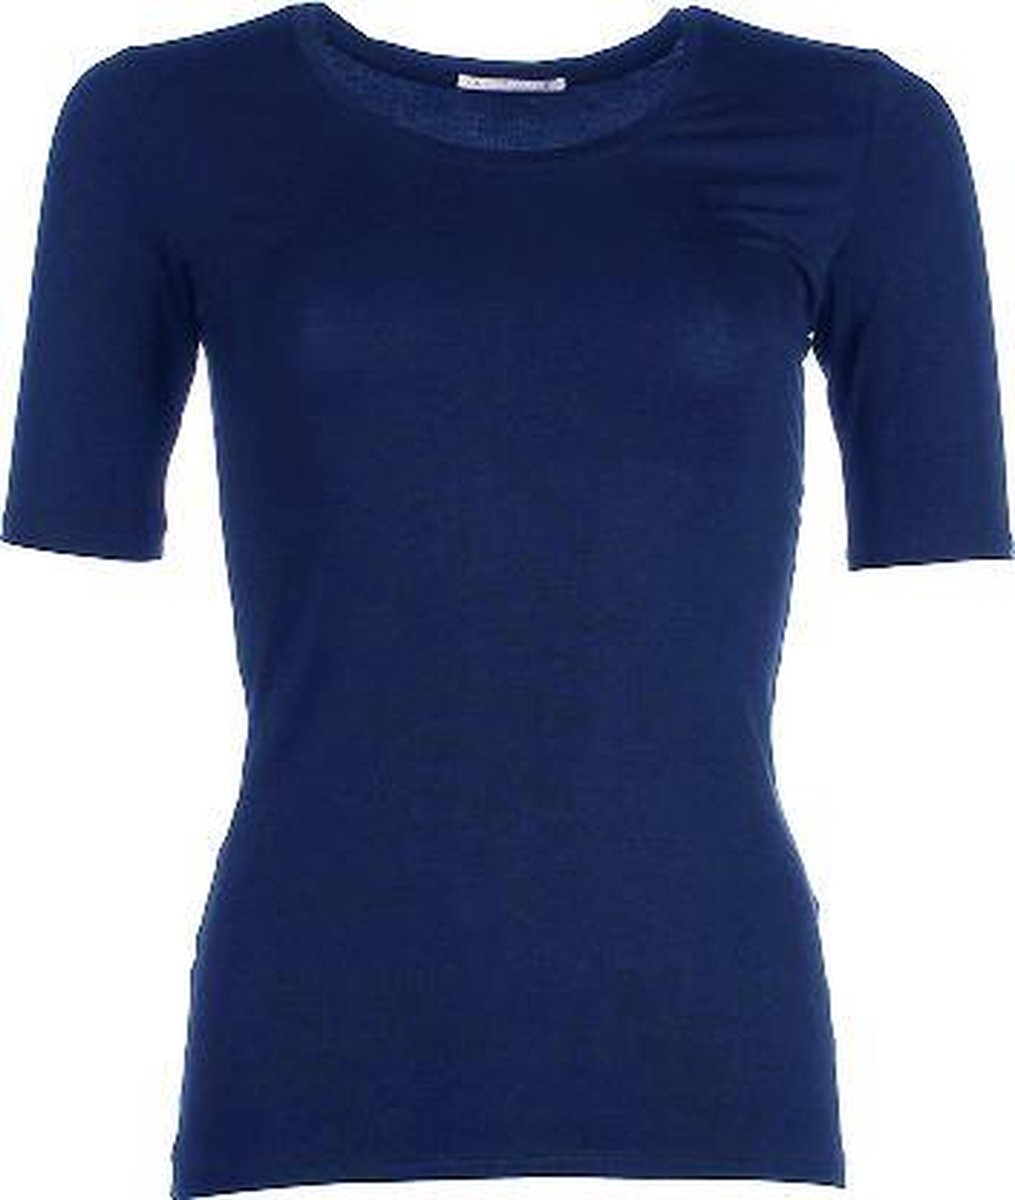 The Original Shortsleeve Shirt - Navy (donker blauw) - XS - bamboe kleding dames